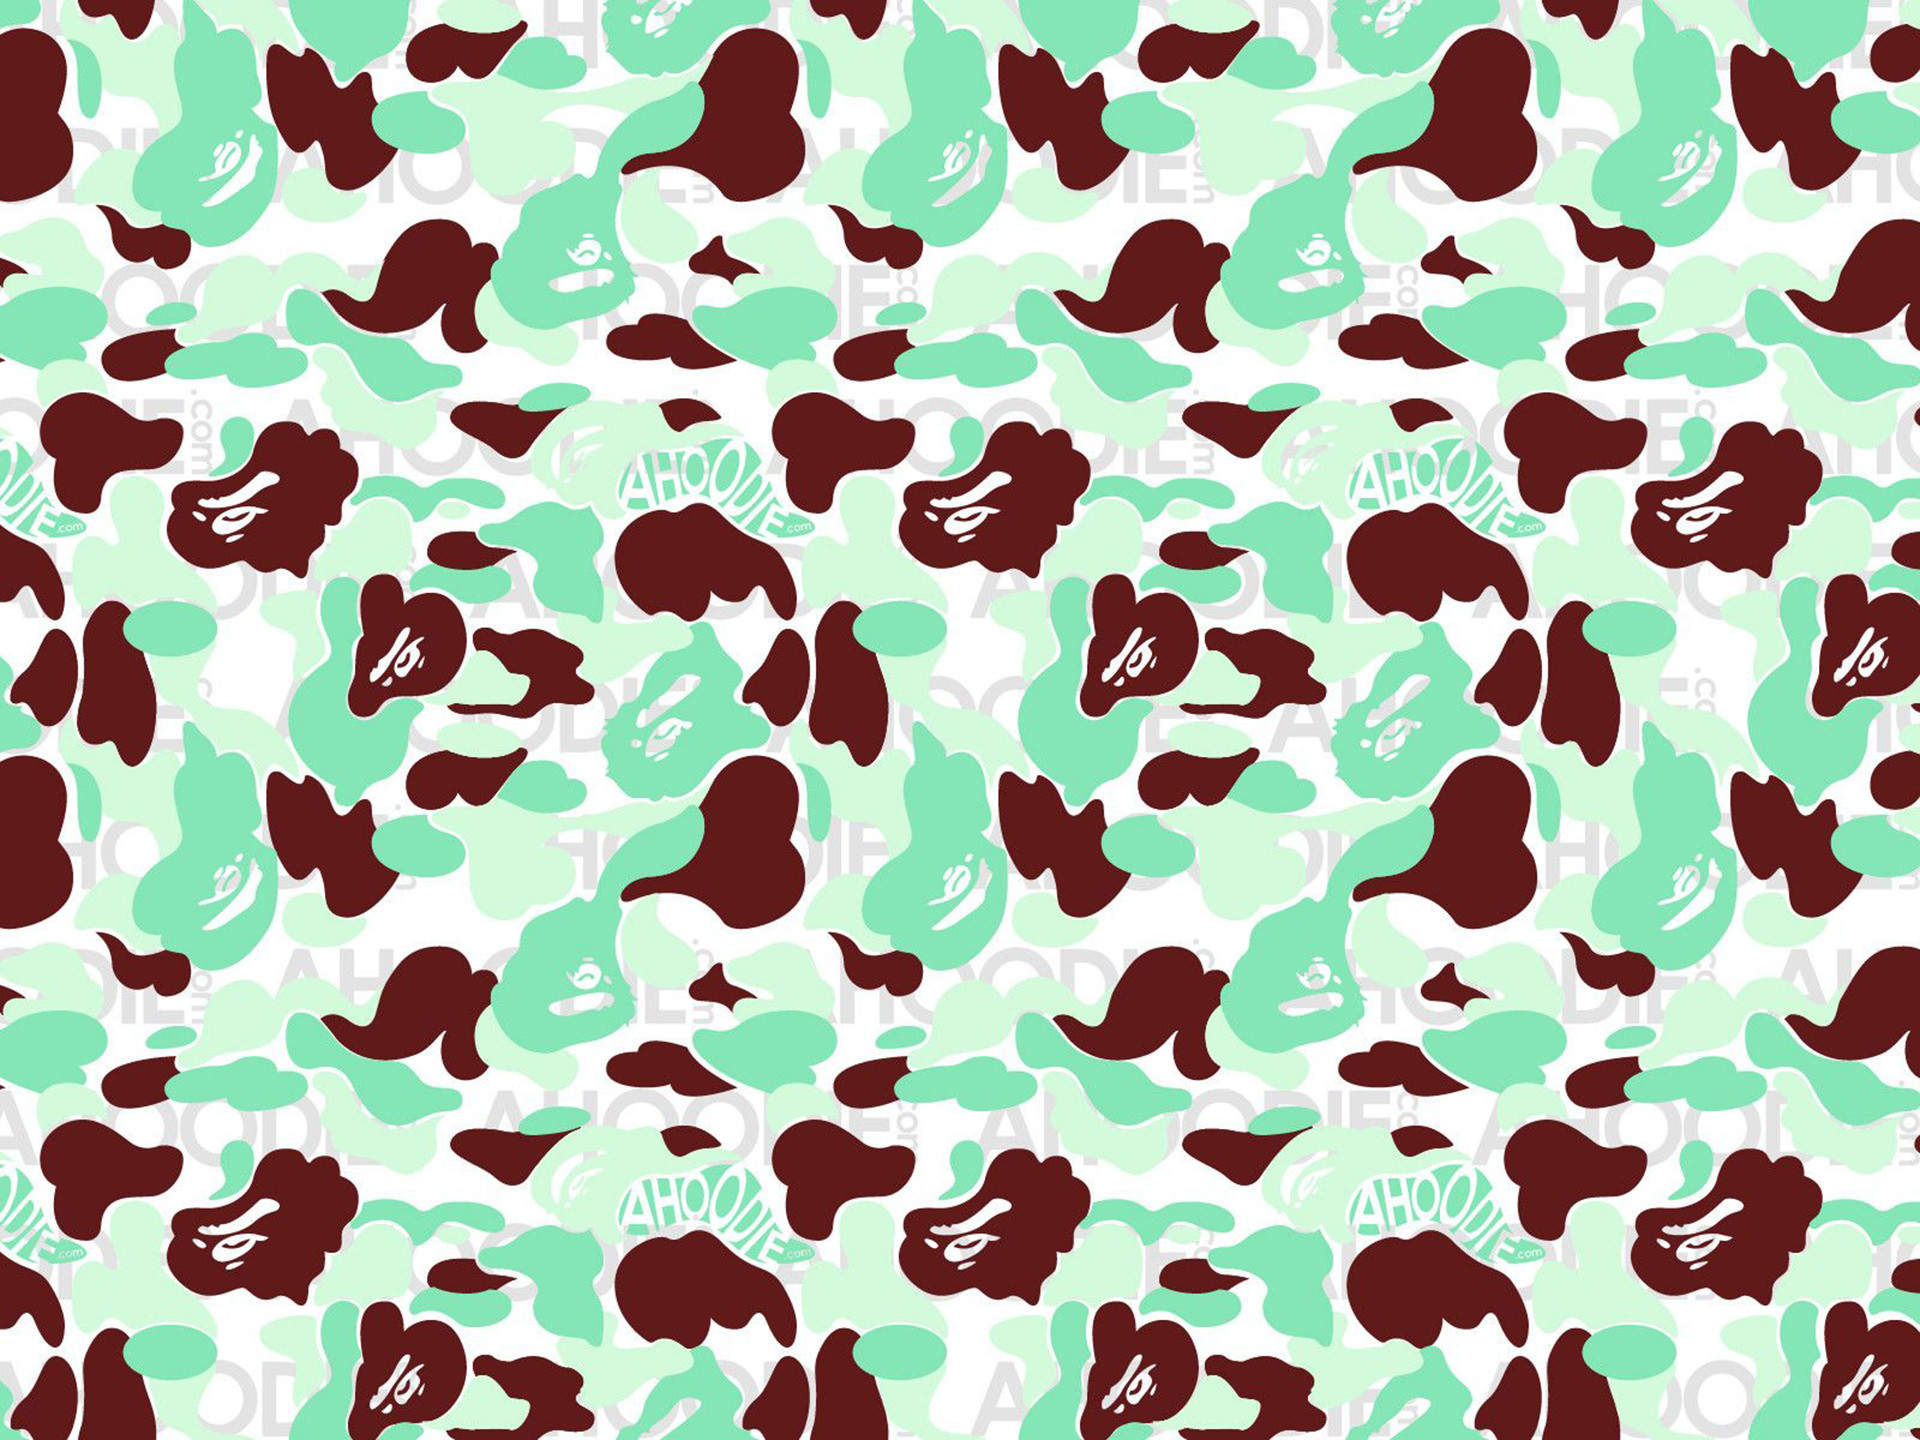 Download Bathing Ape Camouflage Pattern Supreme iPhone Wallpaper